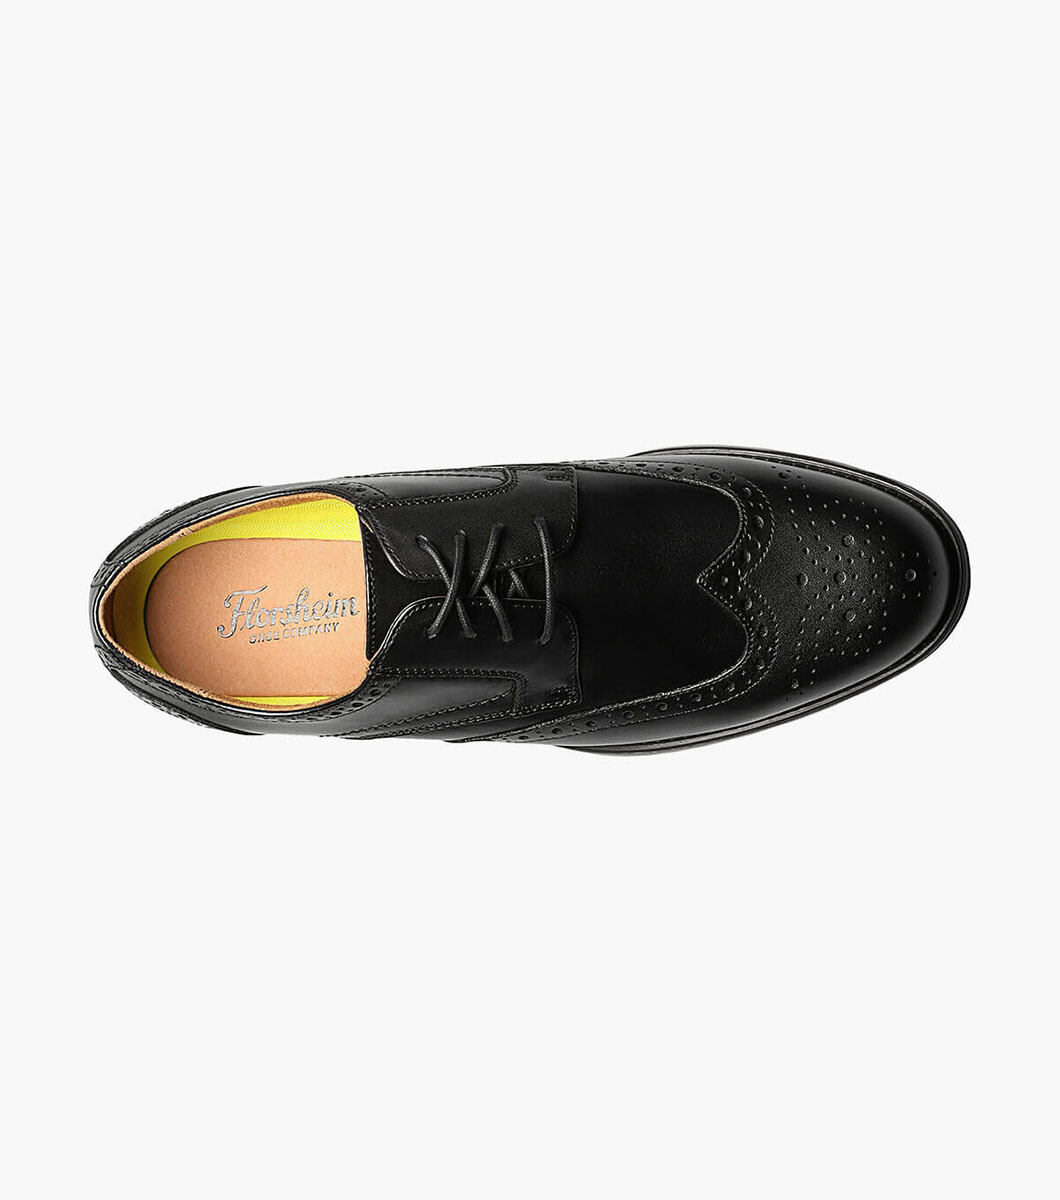 Men's Shoes Florsheim Midtown Wingtip Oxford Cognac Leather Comfort 12139-221 